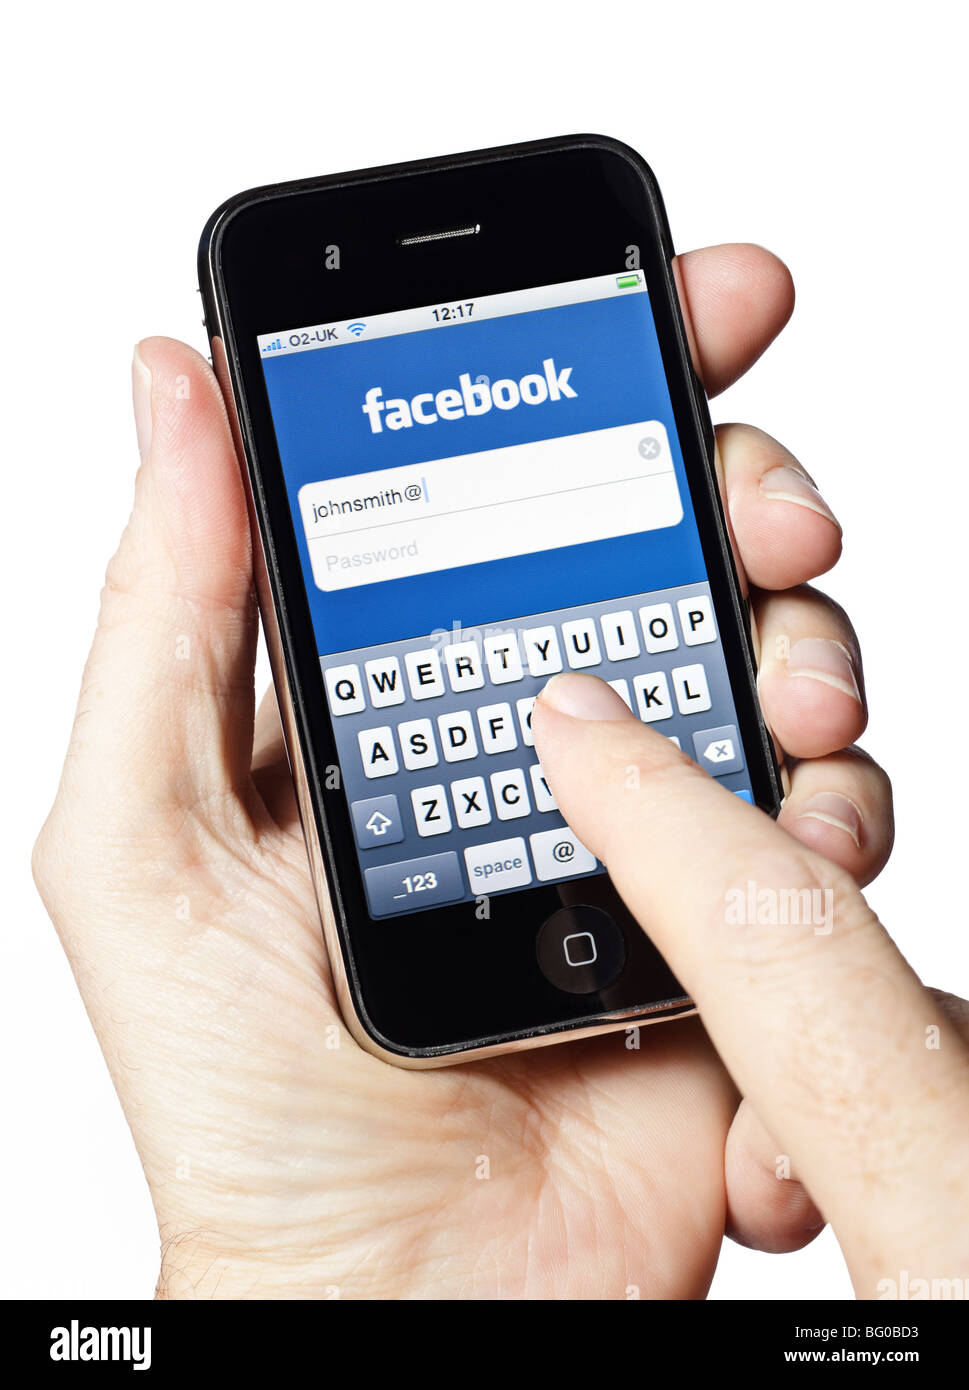 Facebook app - Maschio mano azienda smartphone iPhone smart phone telefono mobile utilizzando Facebook Foto Stock